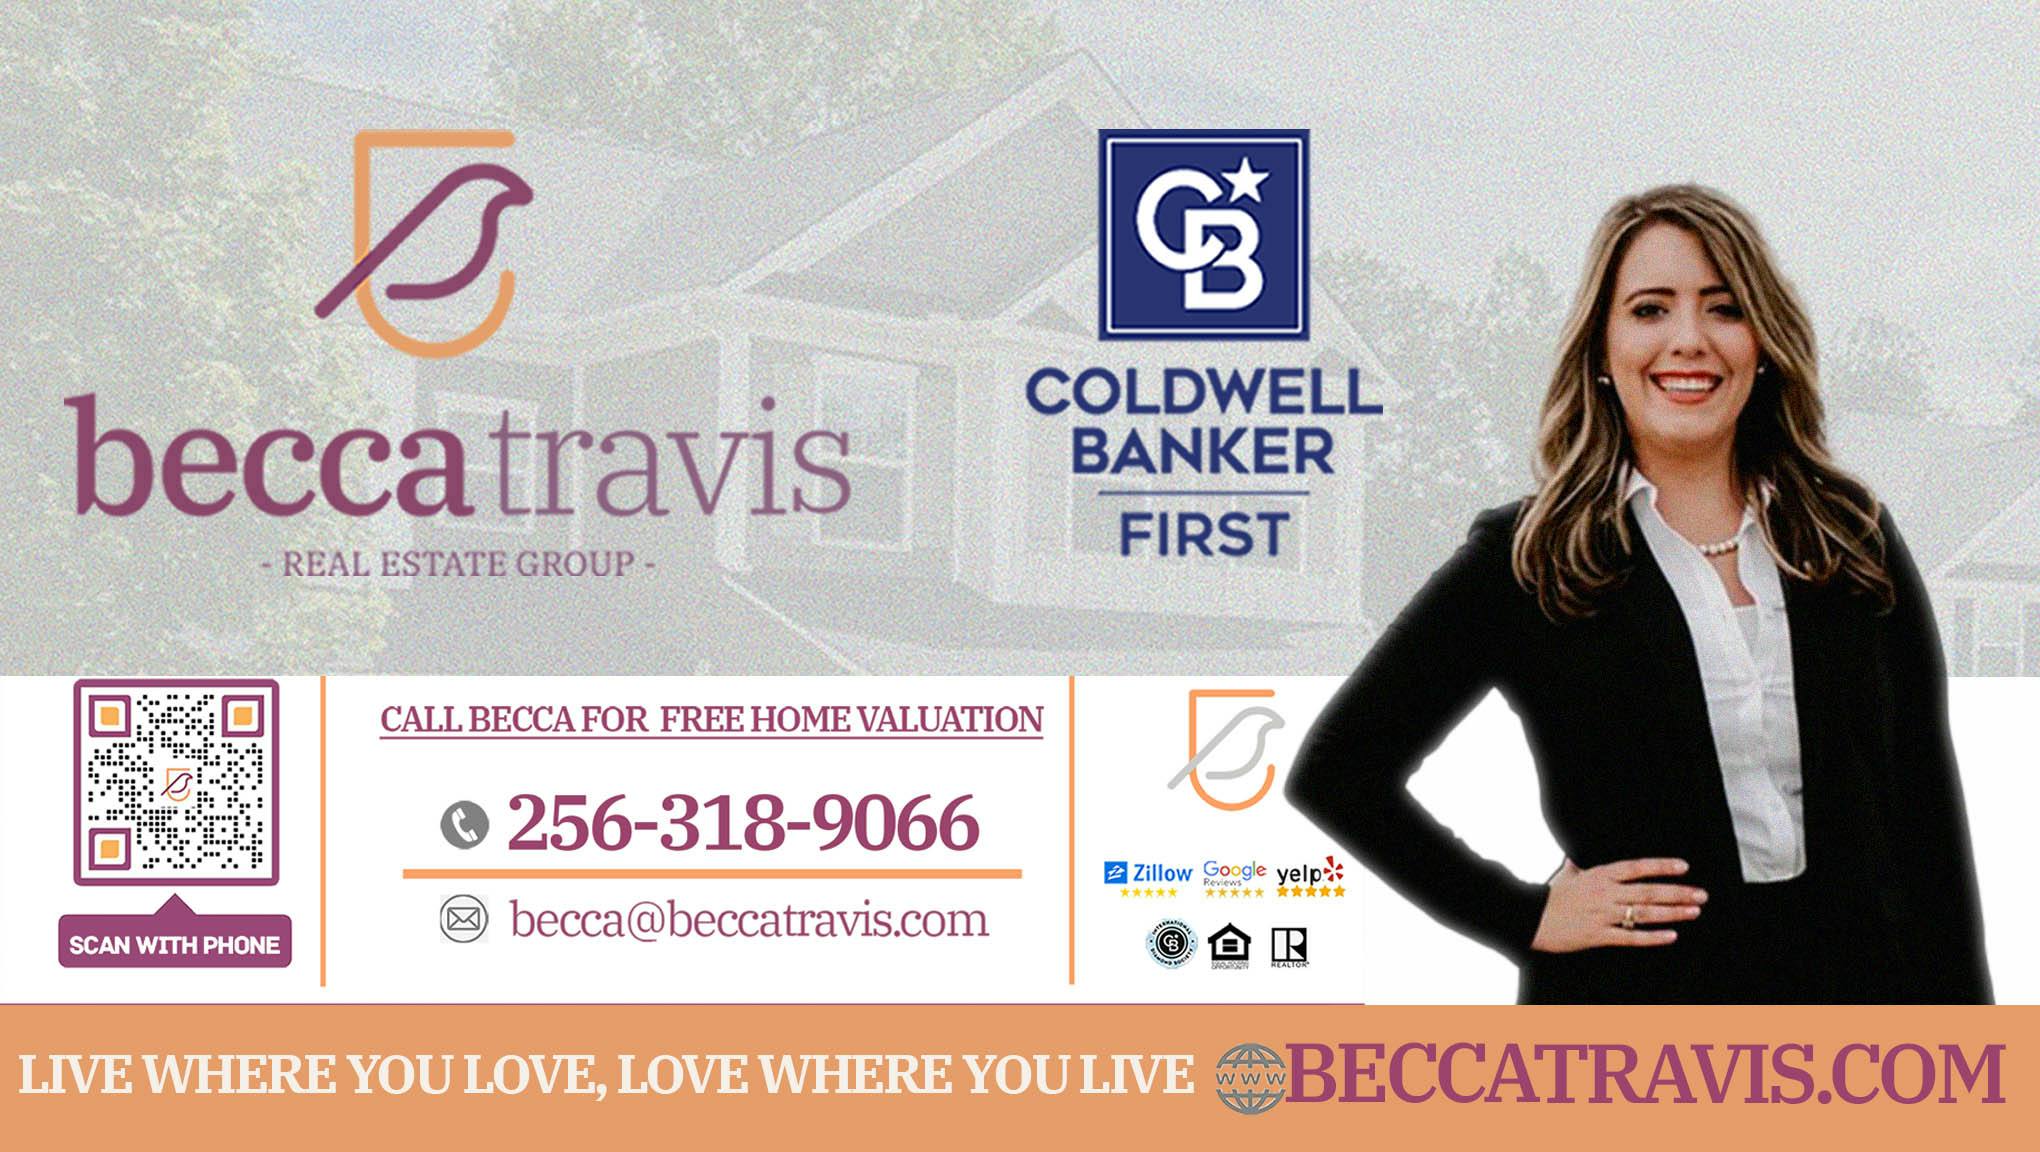 Becca Travis Real Estate Group Huntsville Realtor Coldwell Banker Banner .jpg-1 copy.jpg